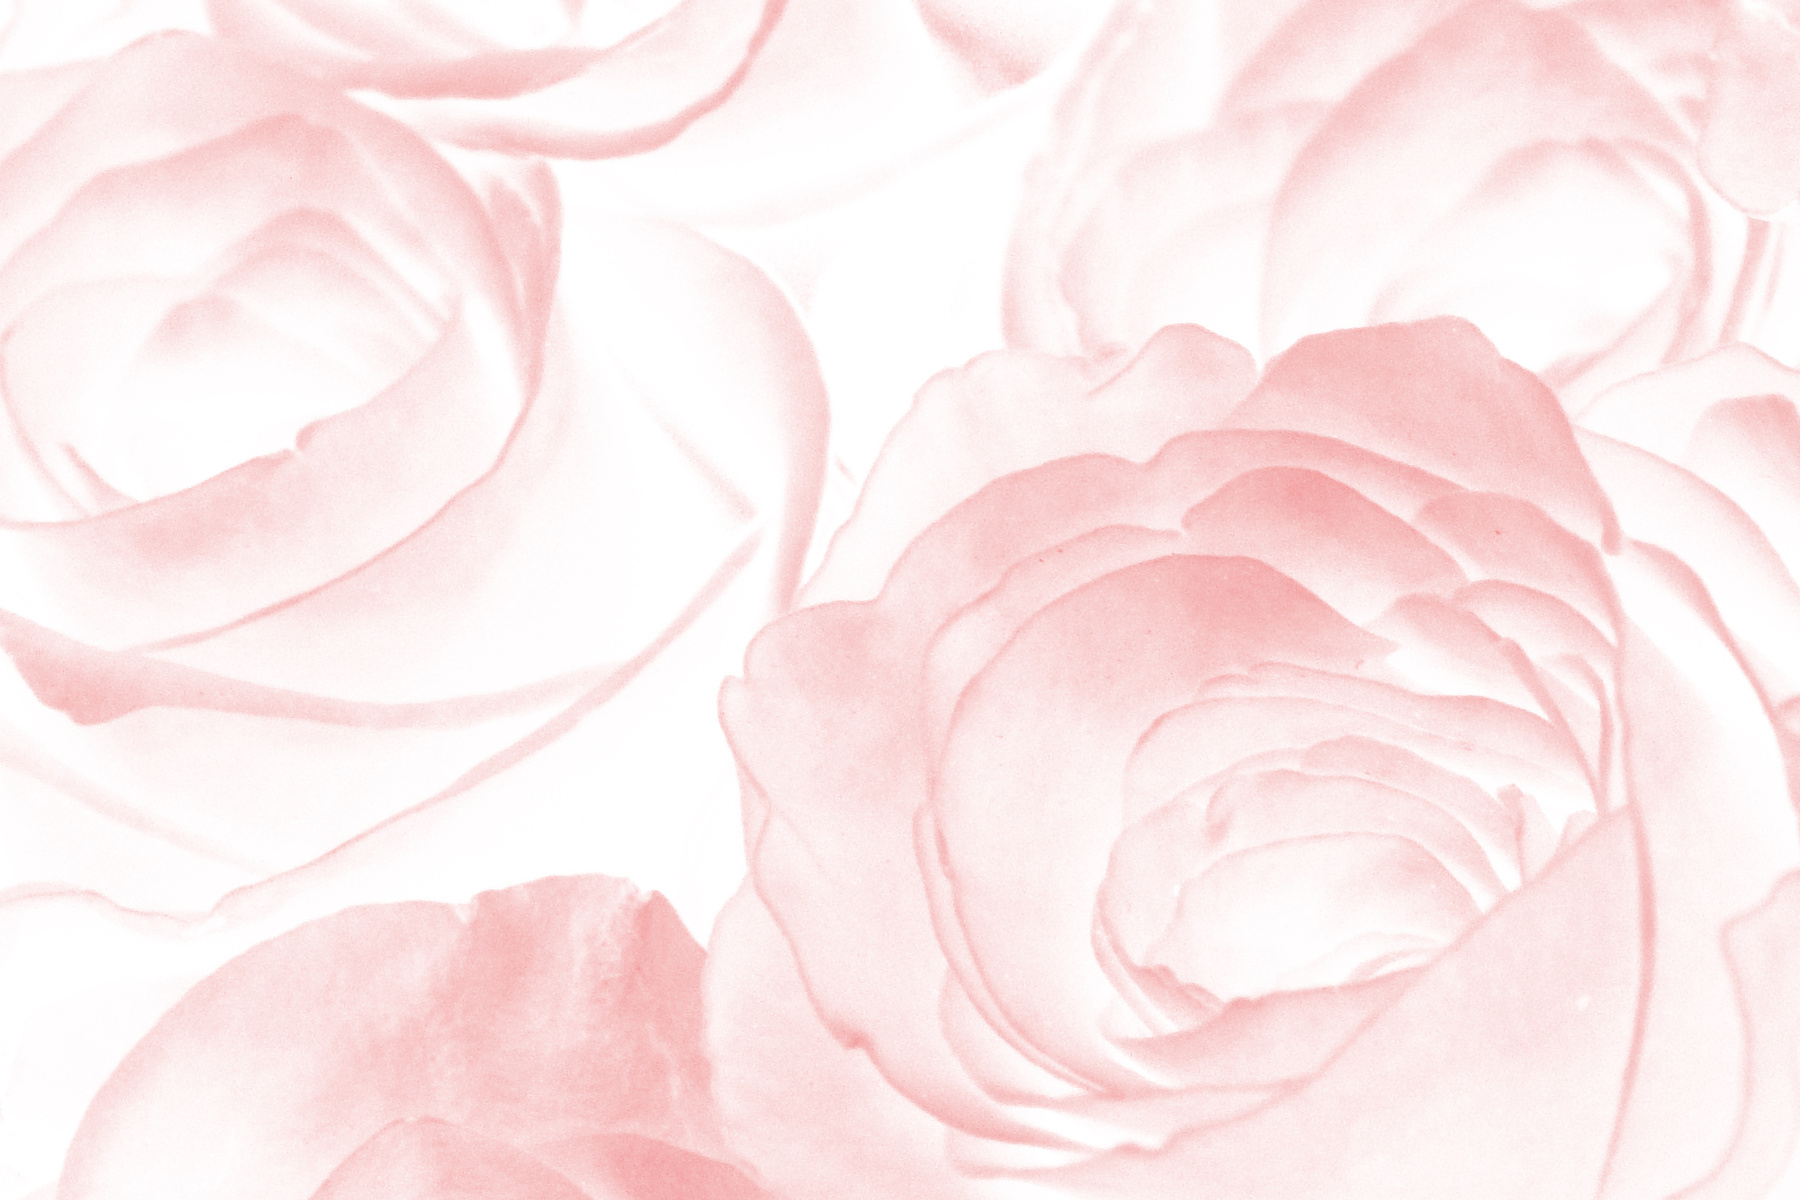 Rose flower background